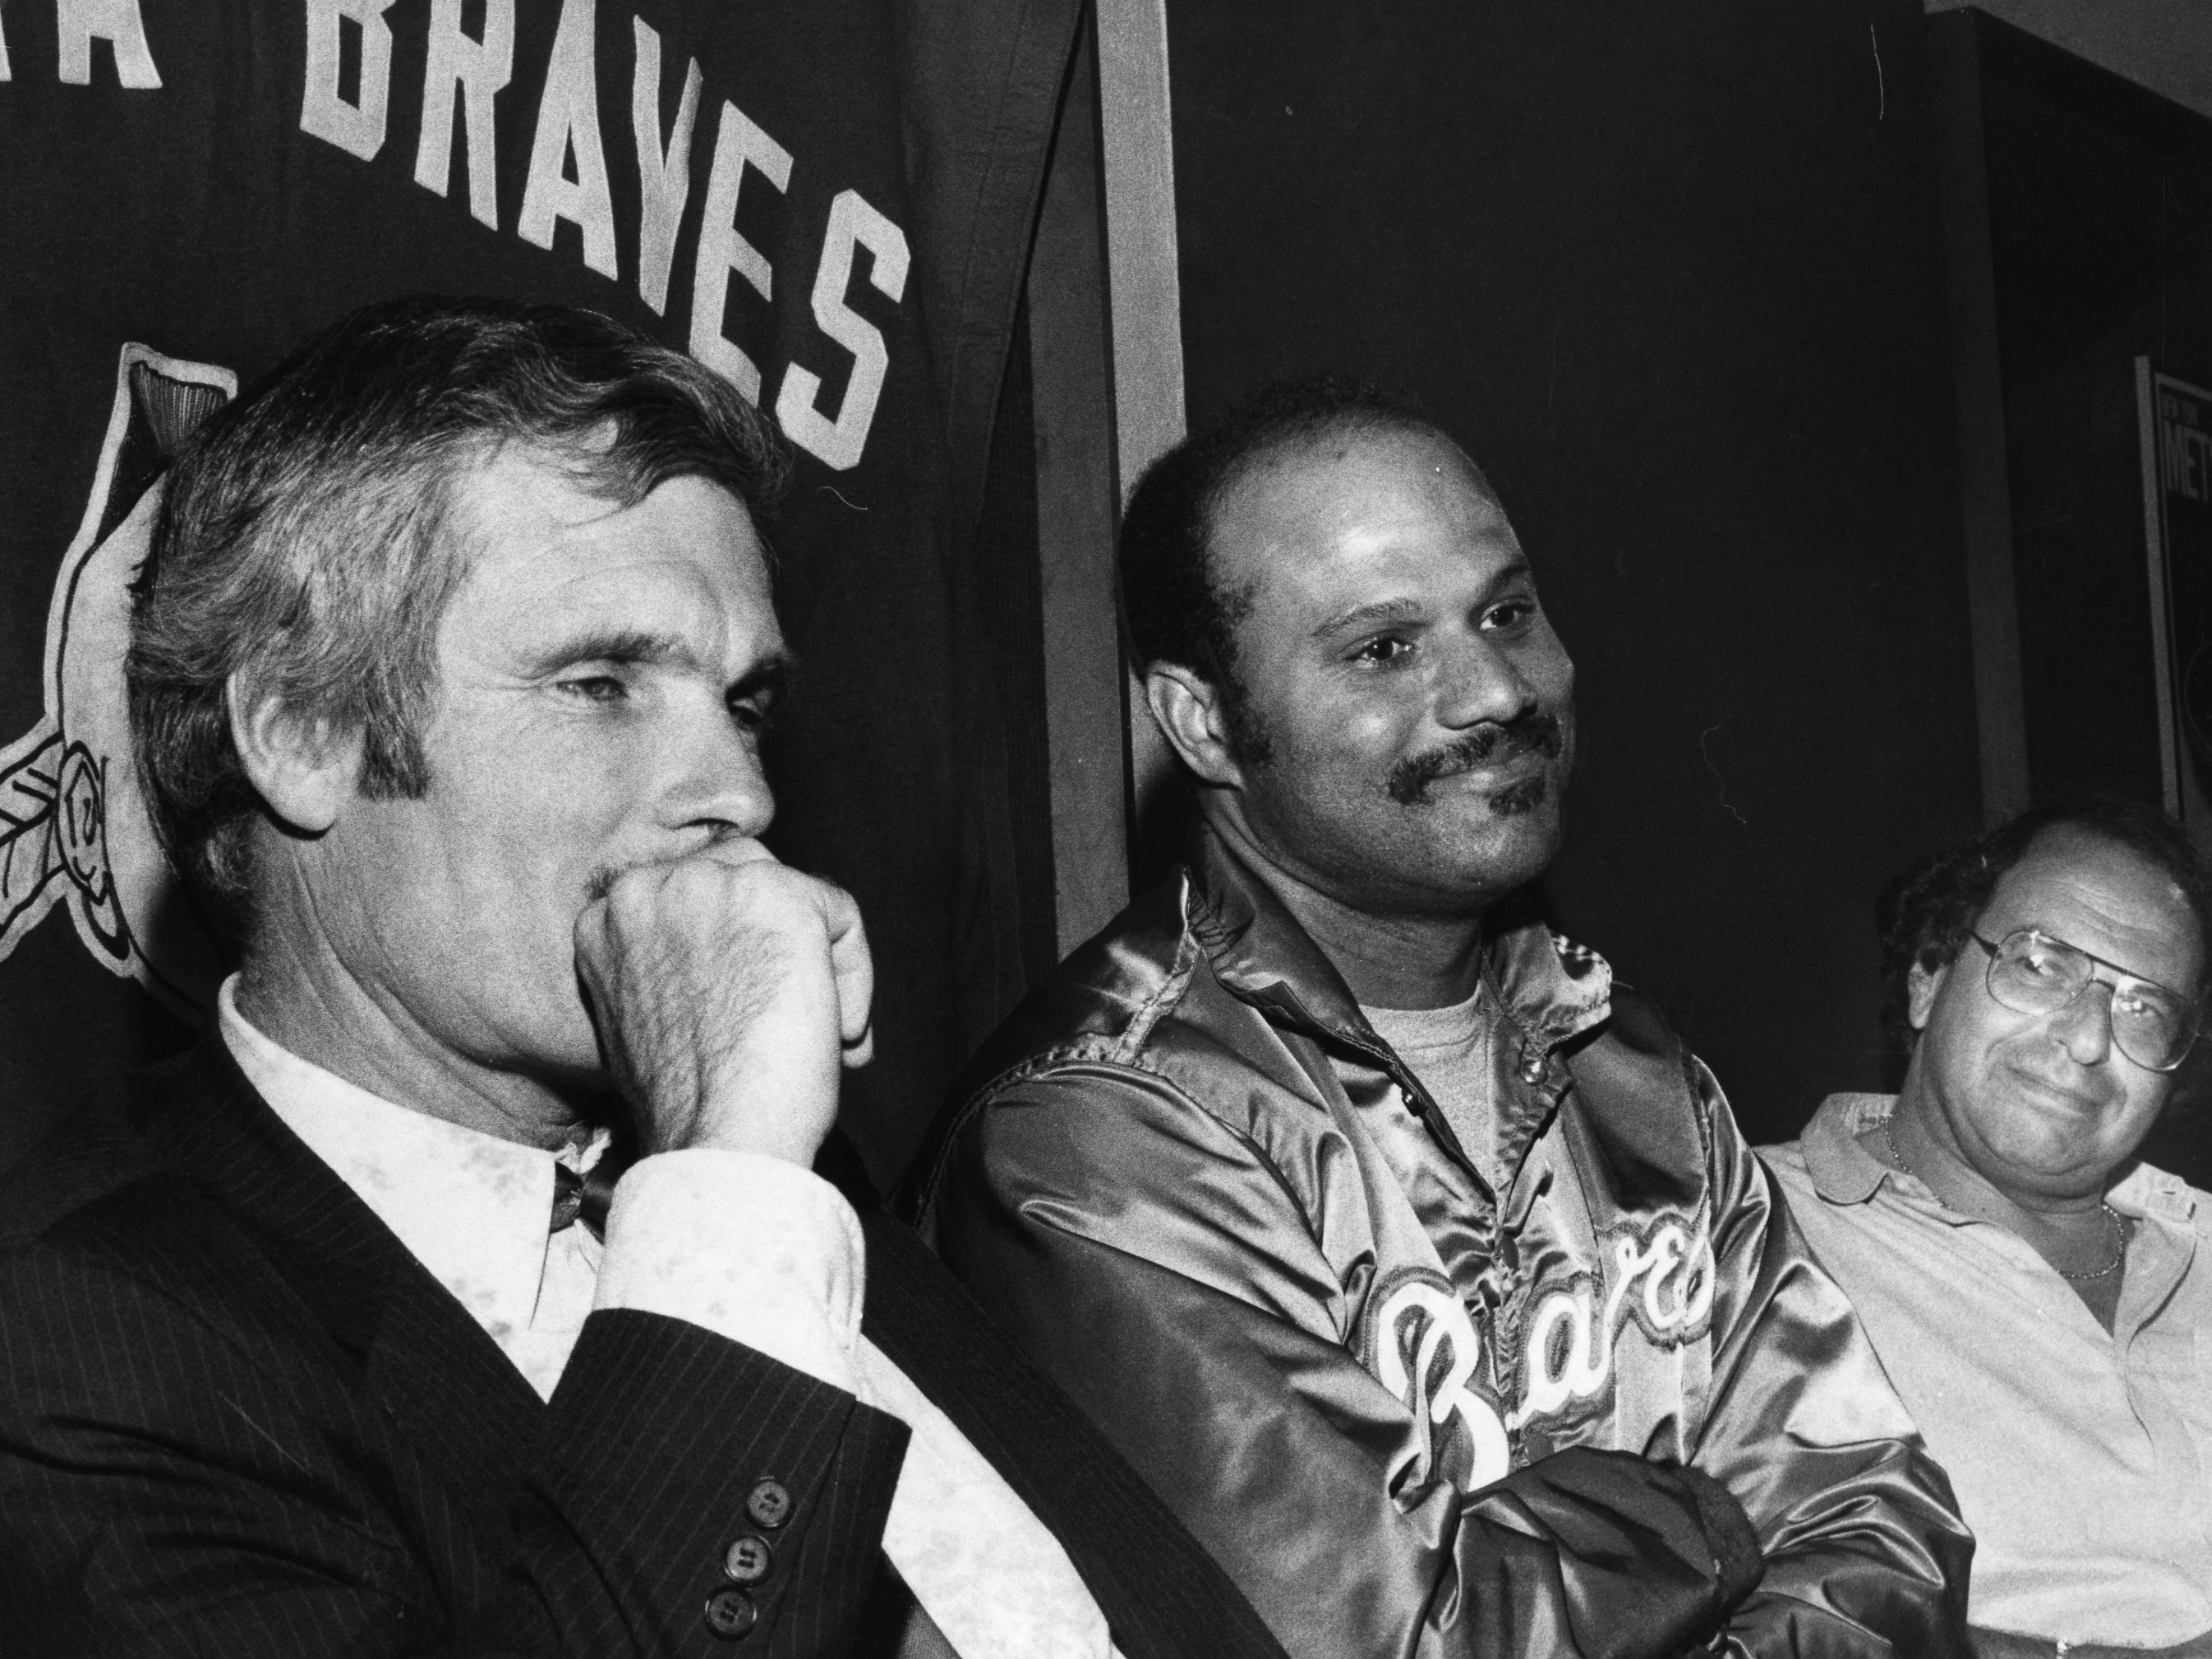 1980 Chris Chambliss Game Worn Atlanta Braves Jersey. Baseball, Lot  #57378